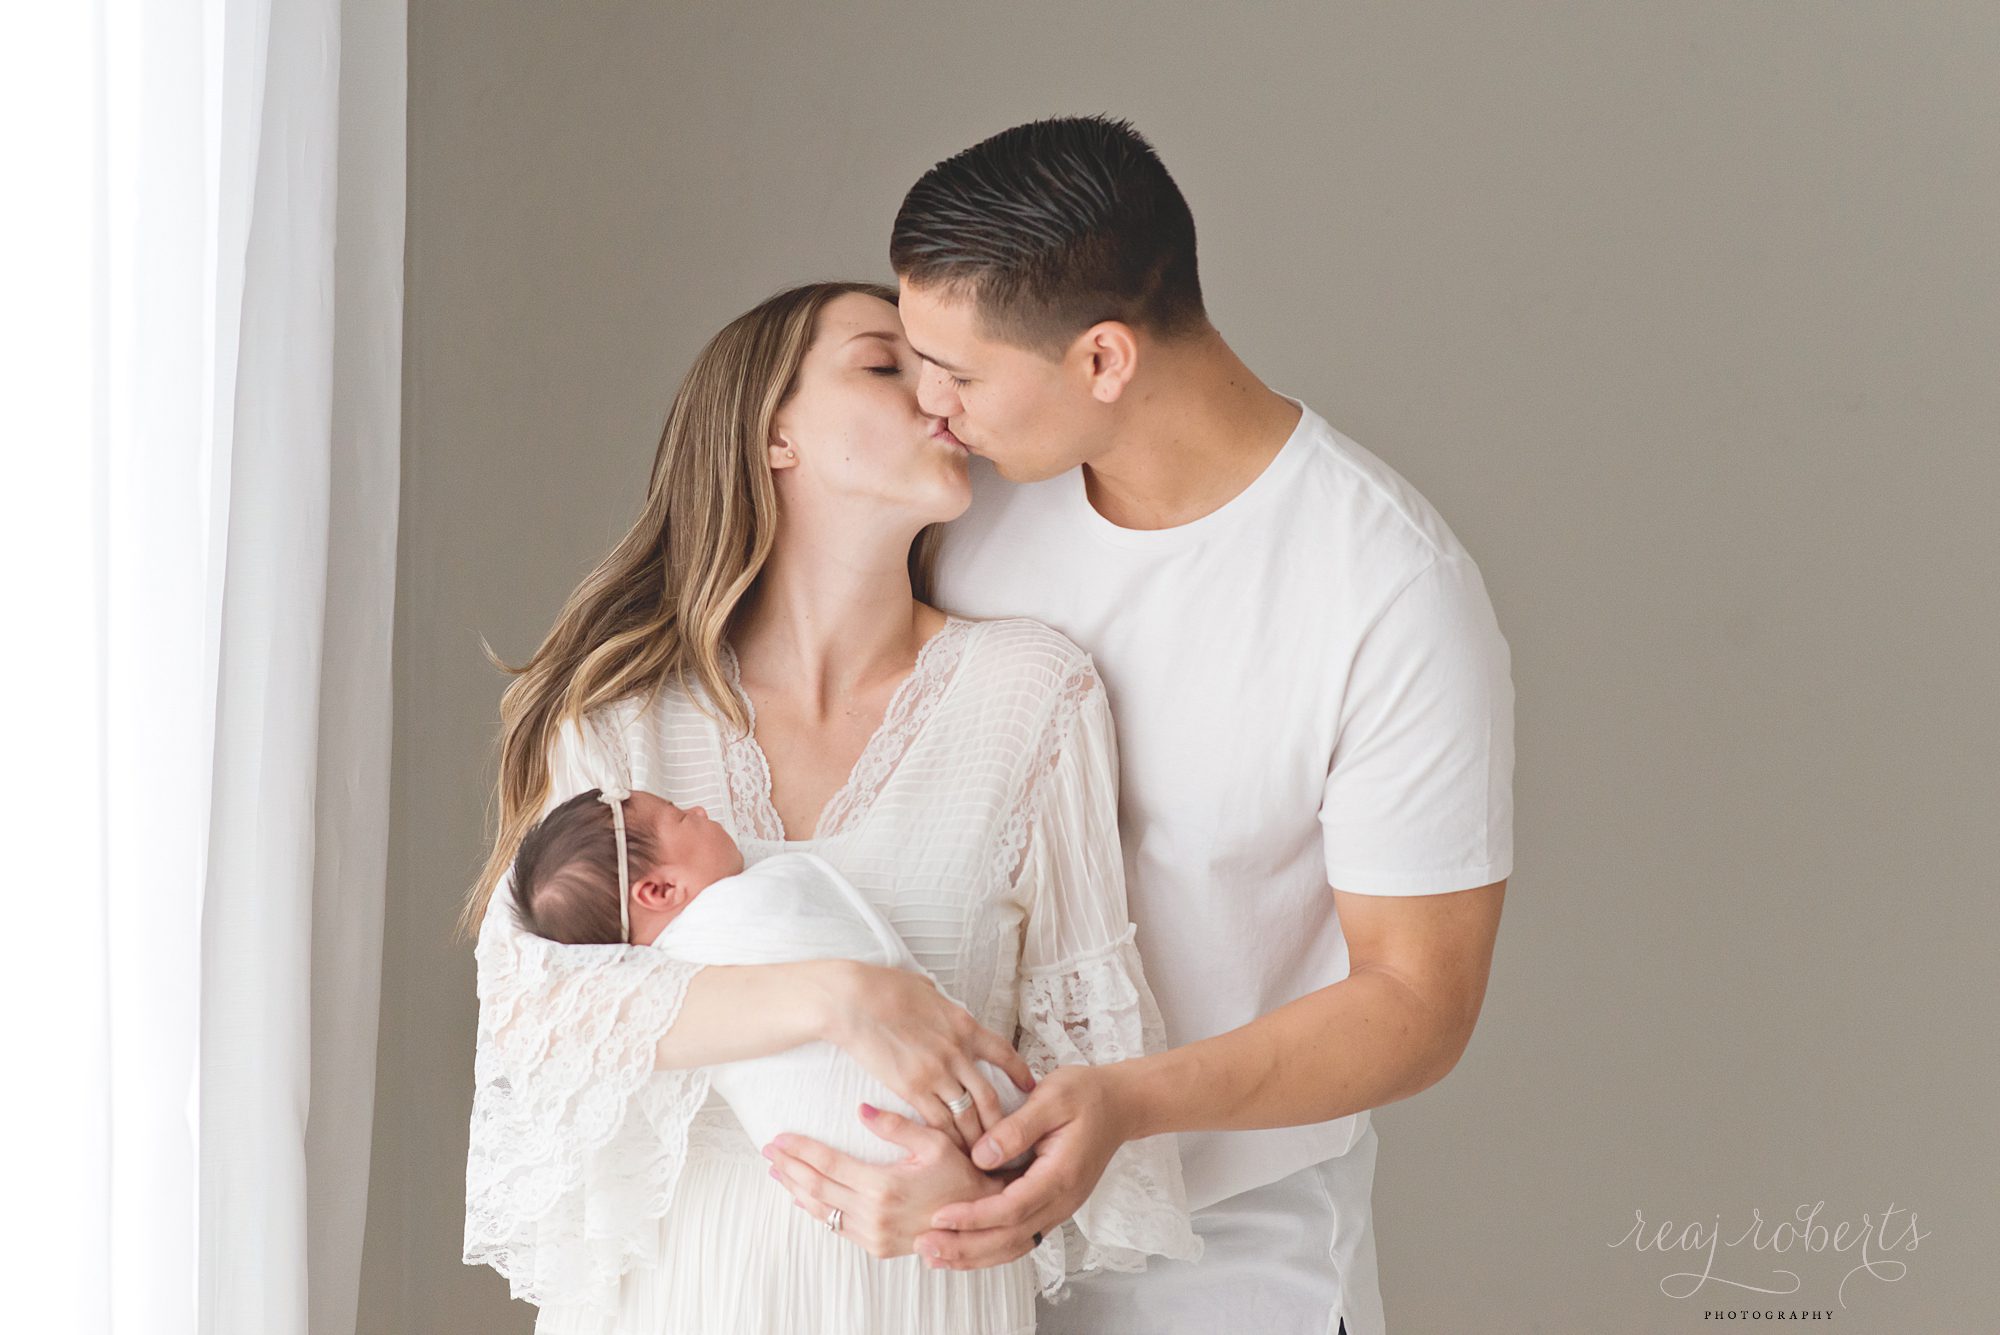 Phoenix Baby Photographer | Reaj Roberts Photography | new parents kissing holding newborn pose